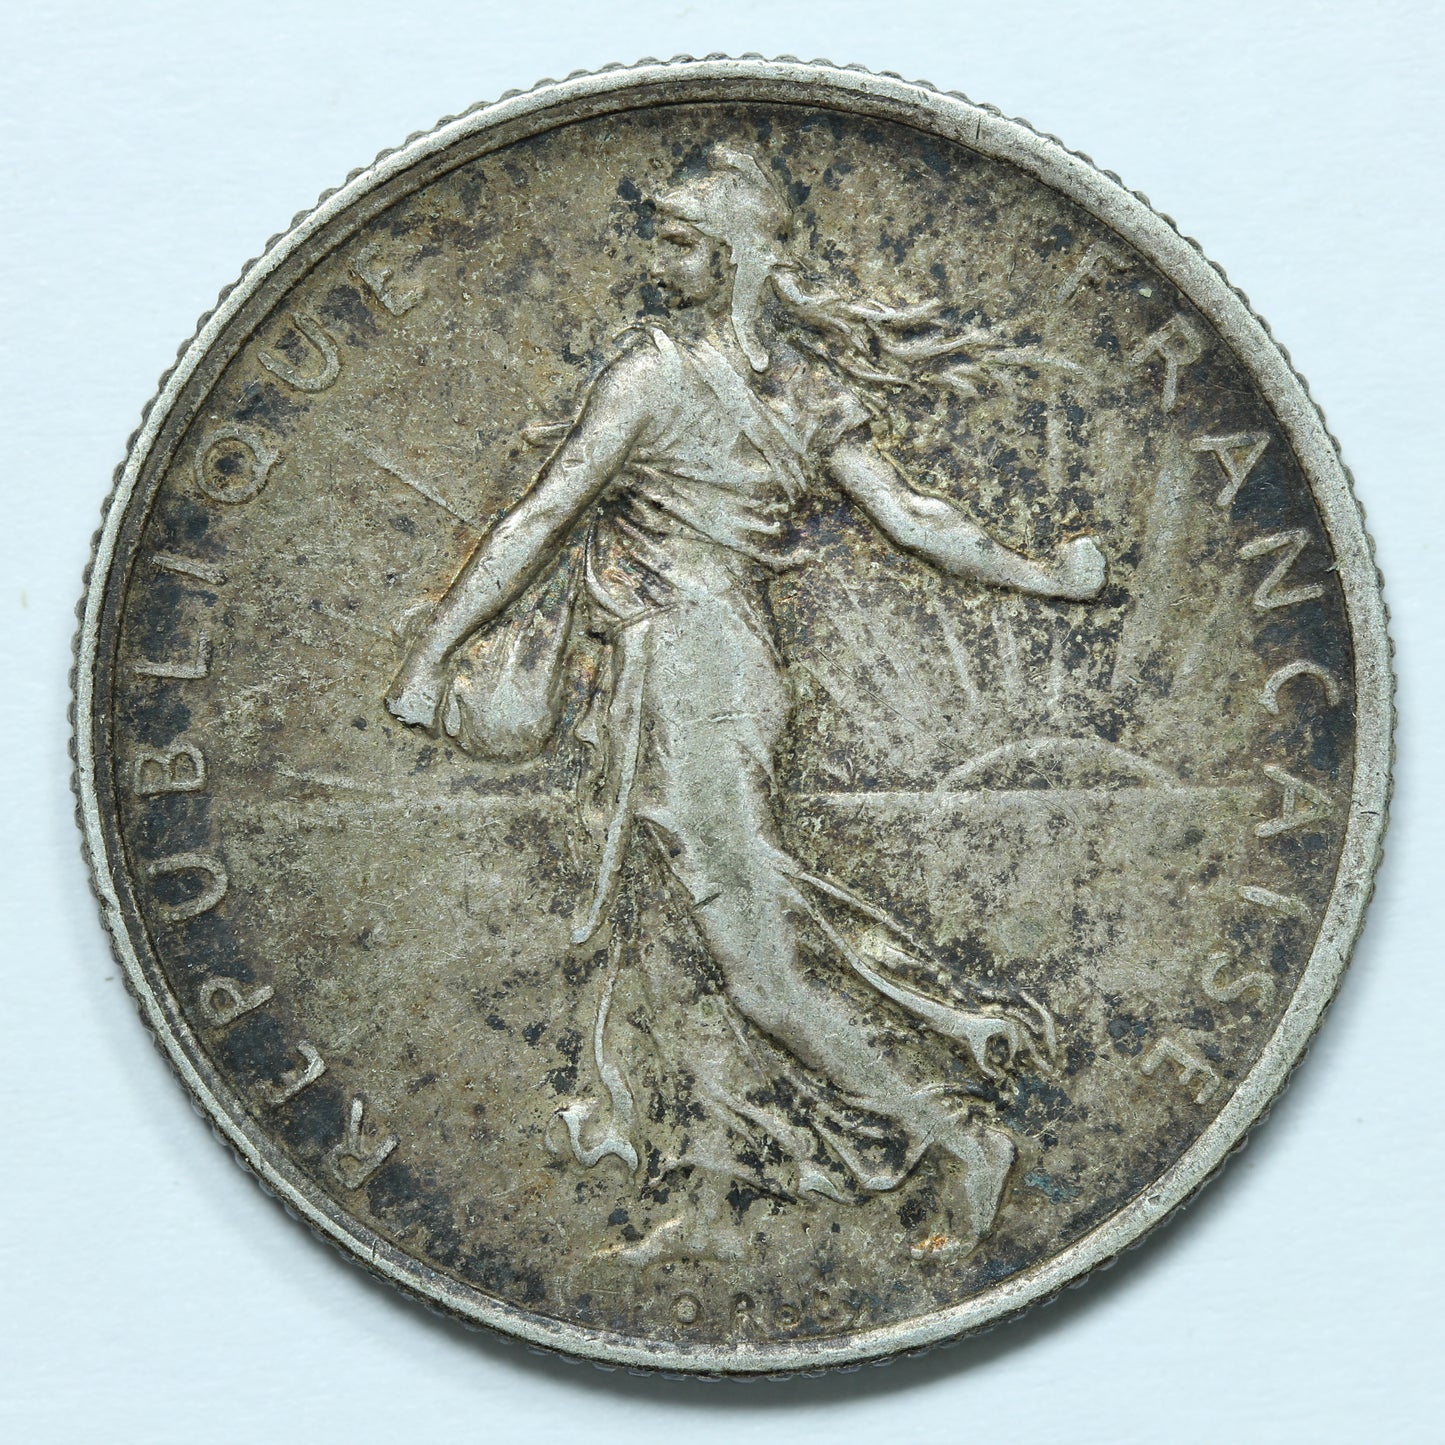 1919 2 Francs France Semeuse Silver Coin - KM# 845.1